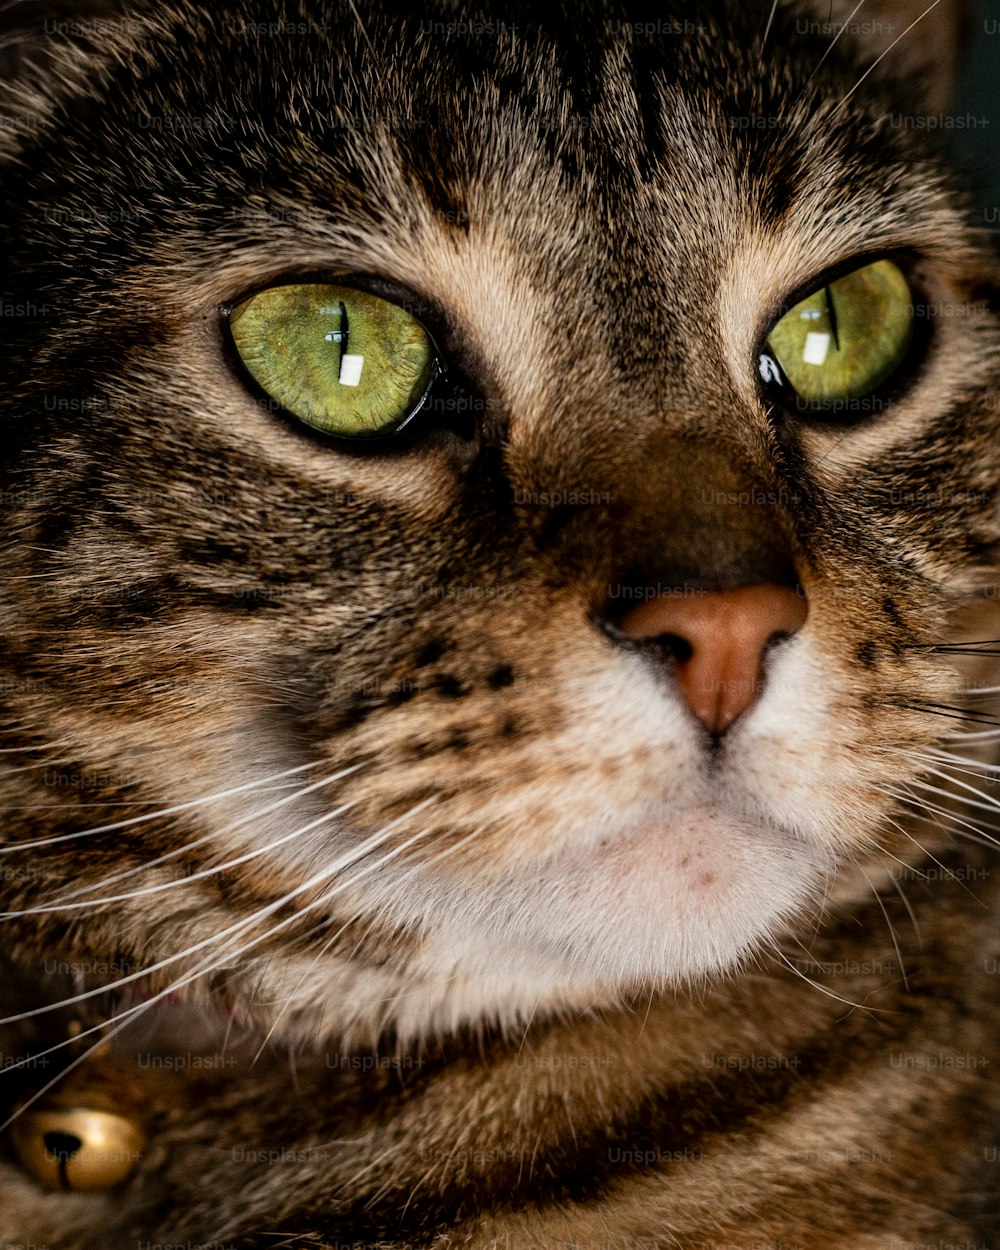 Un primer plano de un gato con ojos verdes